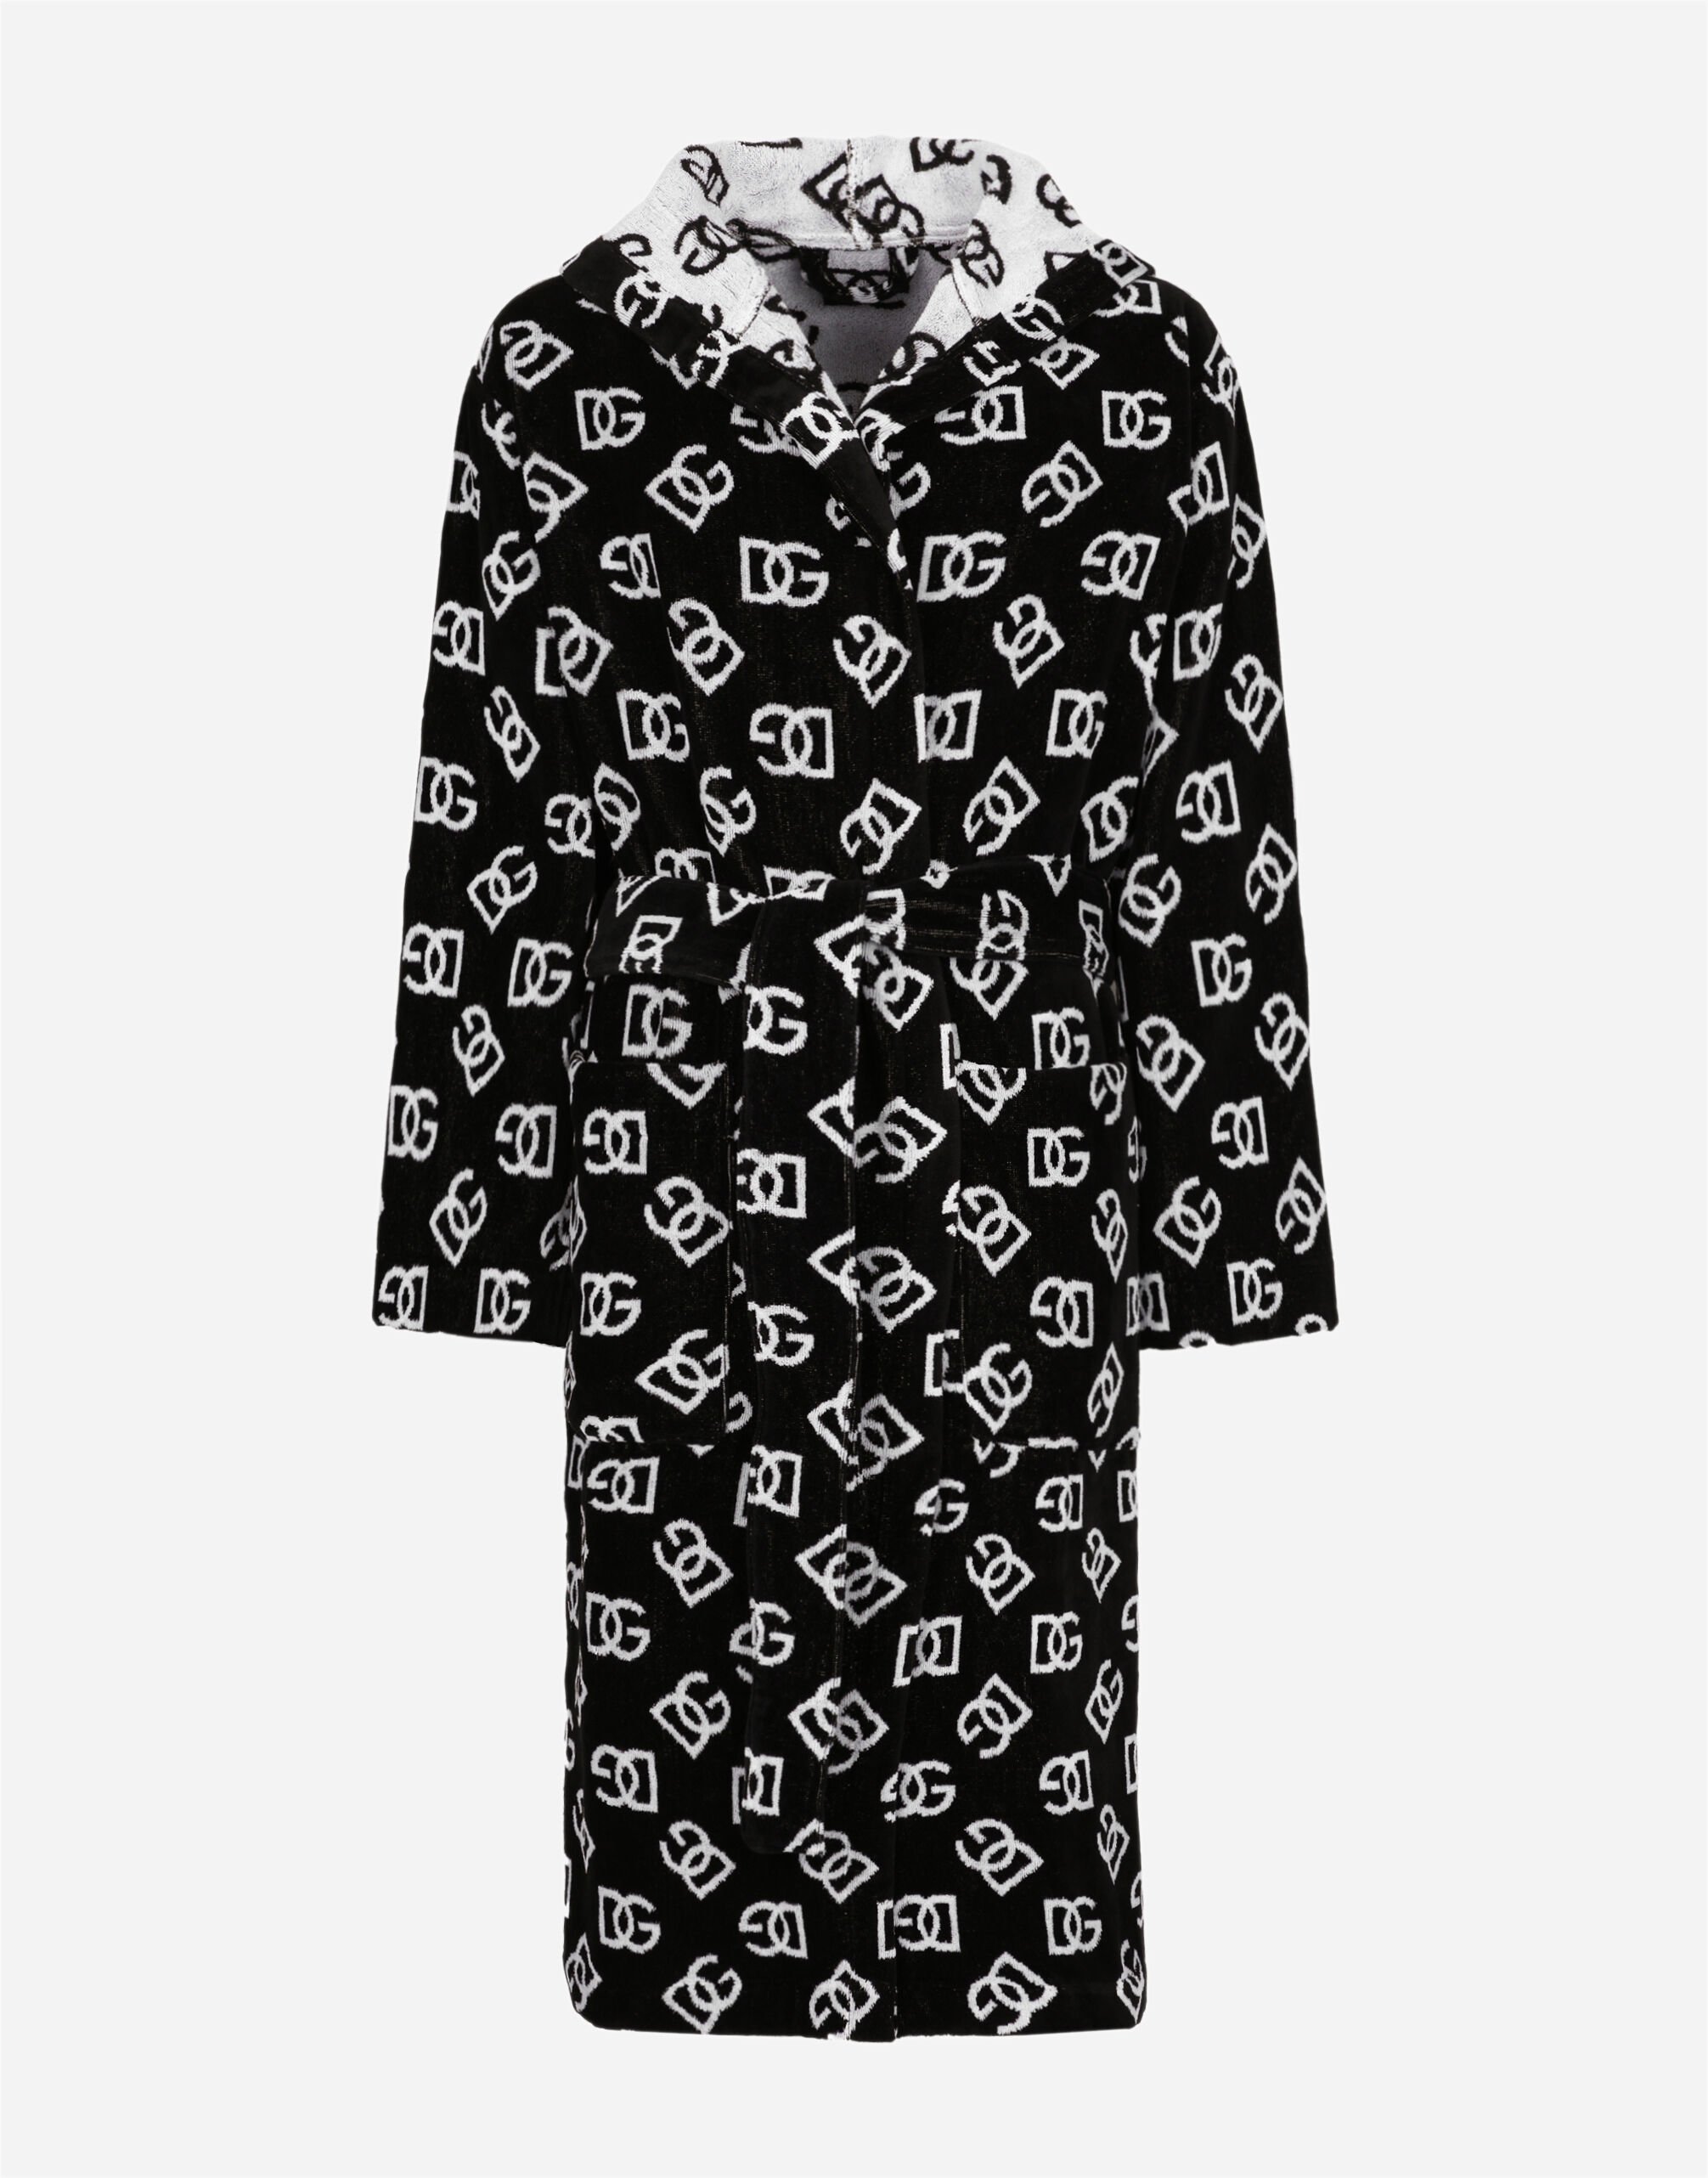 Dolce & Gabbana Bath Robe in Cotton Terry Jacquard Multicolor TCE002TCAF9